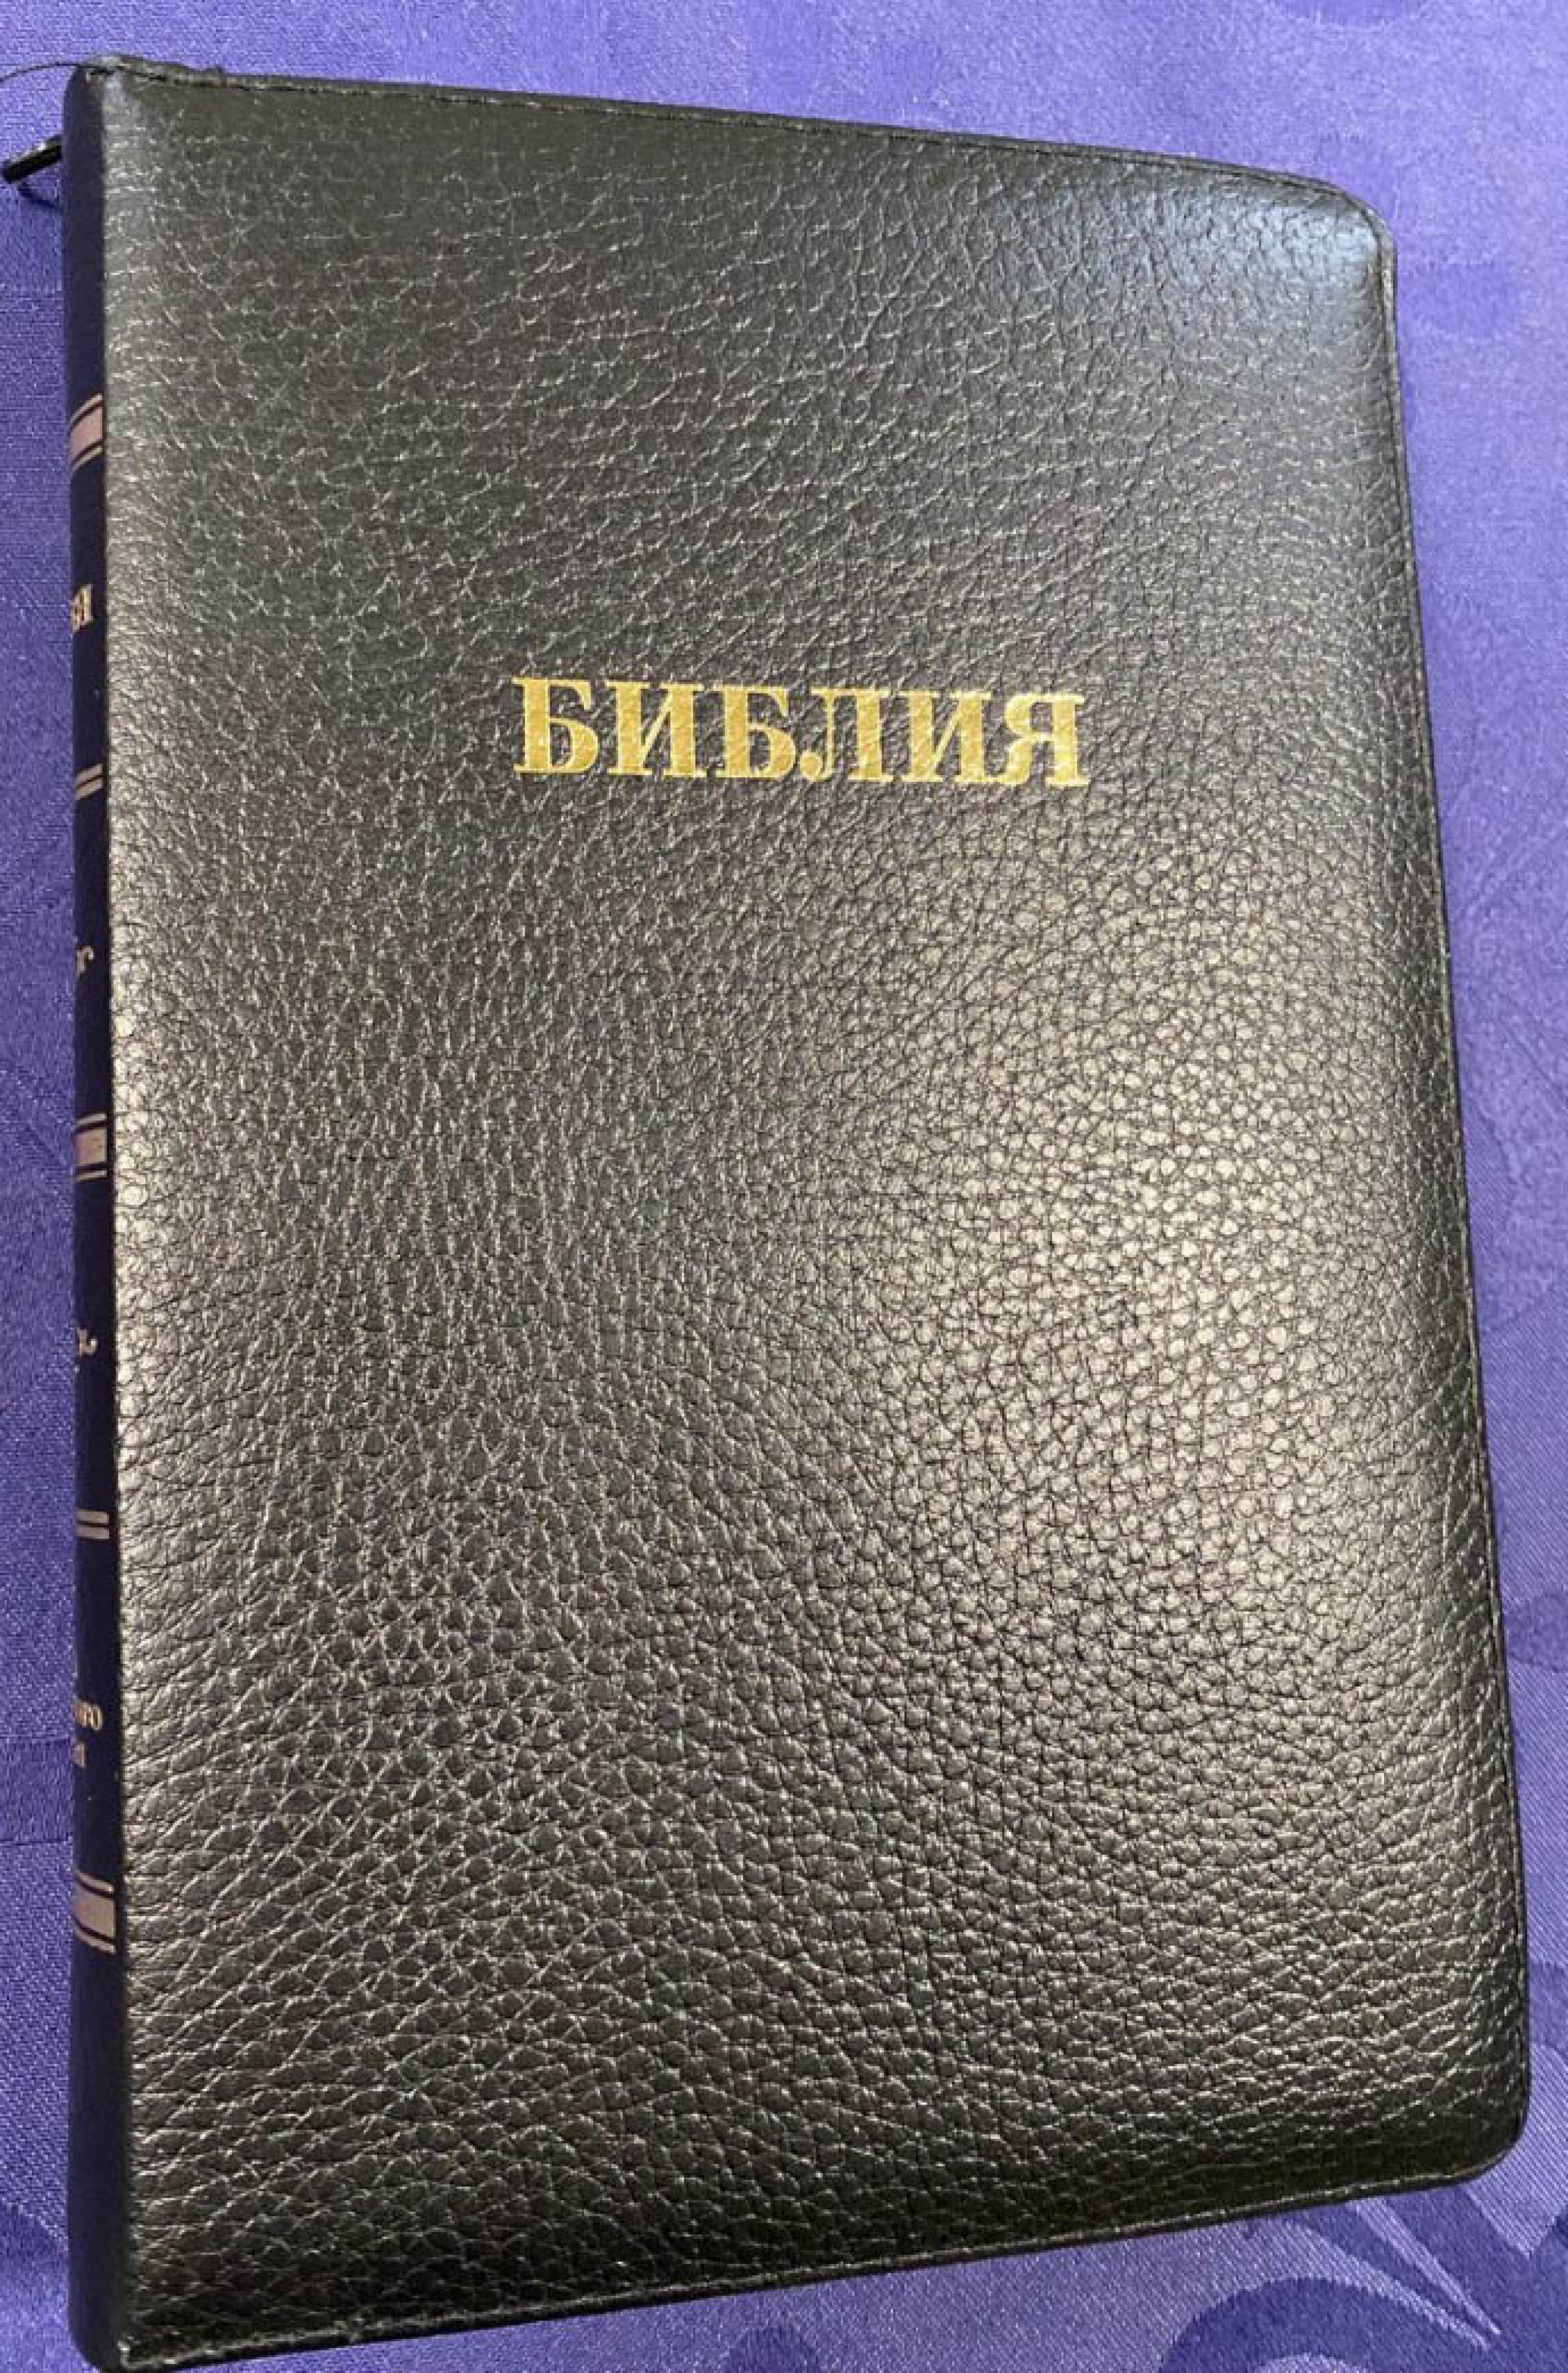 Библия 057 zti нат/кожа (7698)